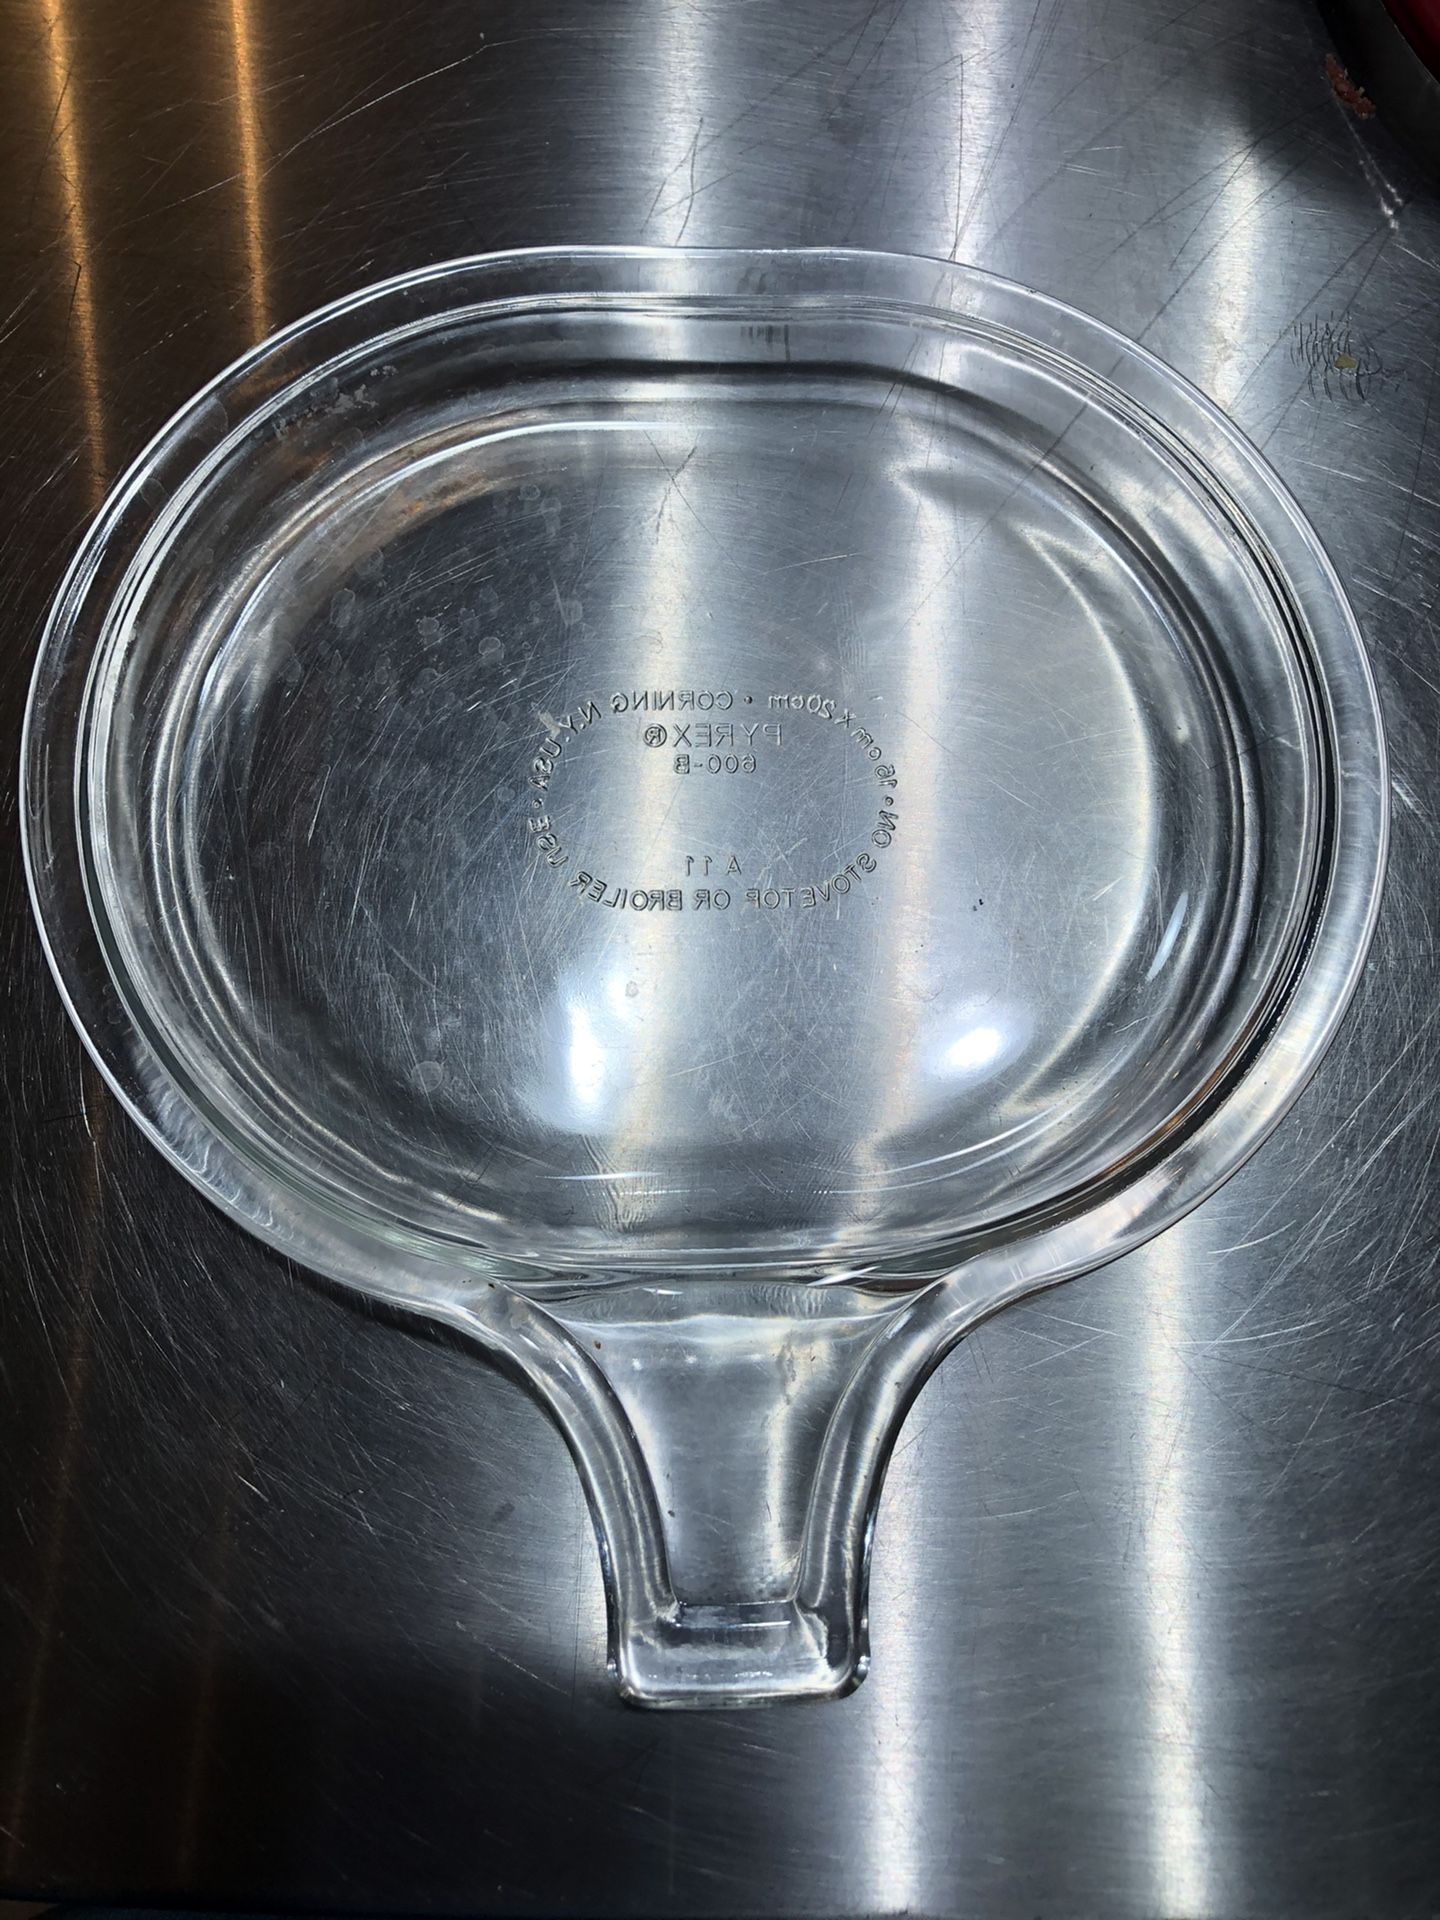 Pyrex glass Corning ware lids